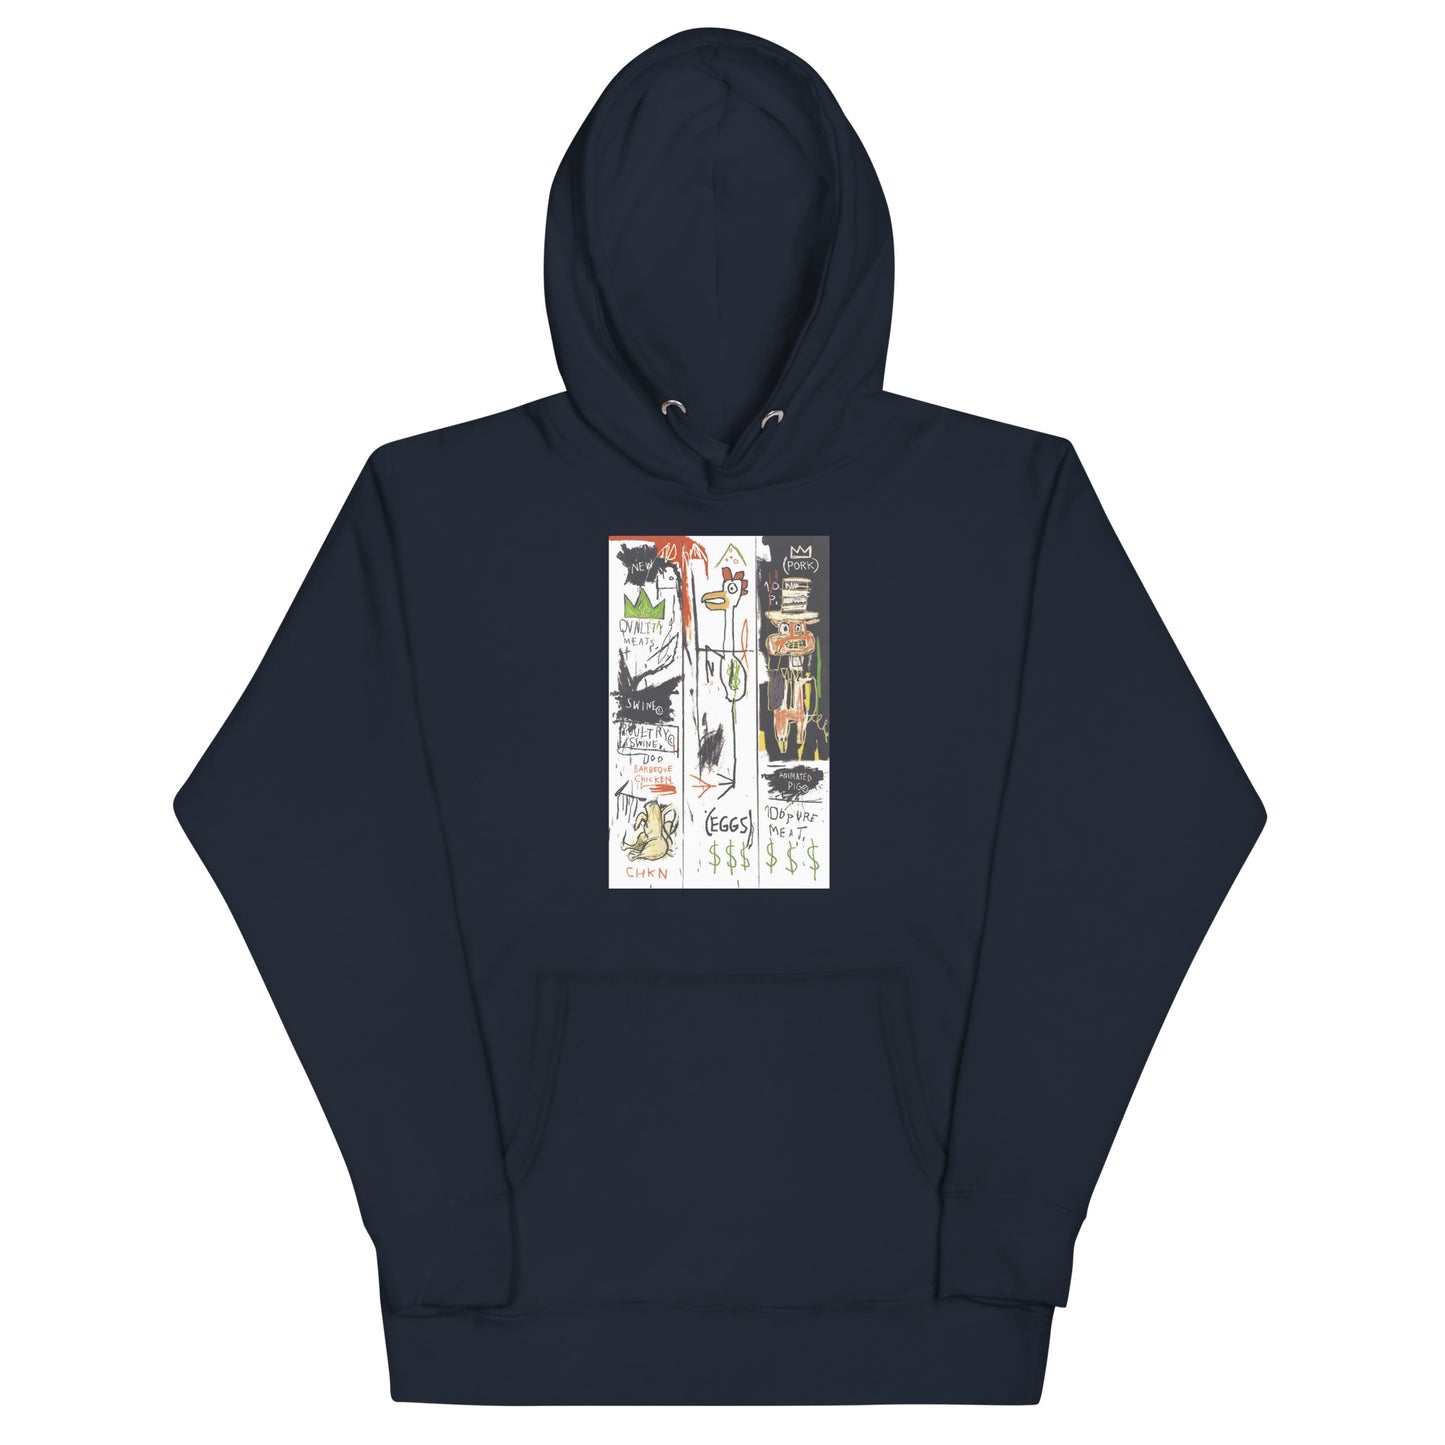 Jean-Michel Basquiat "Quality Meats for the Public" 1982 Artwork Printed Premium Streetwear Sweatshirt Hoodie Navy Blue